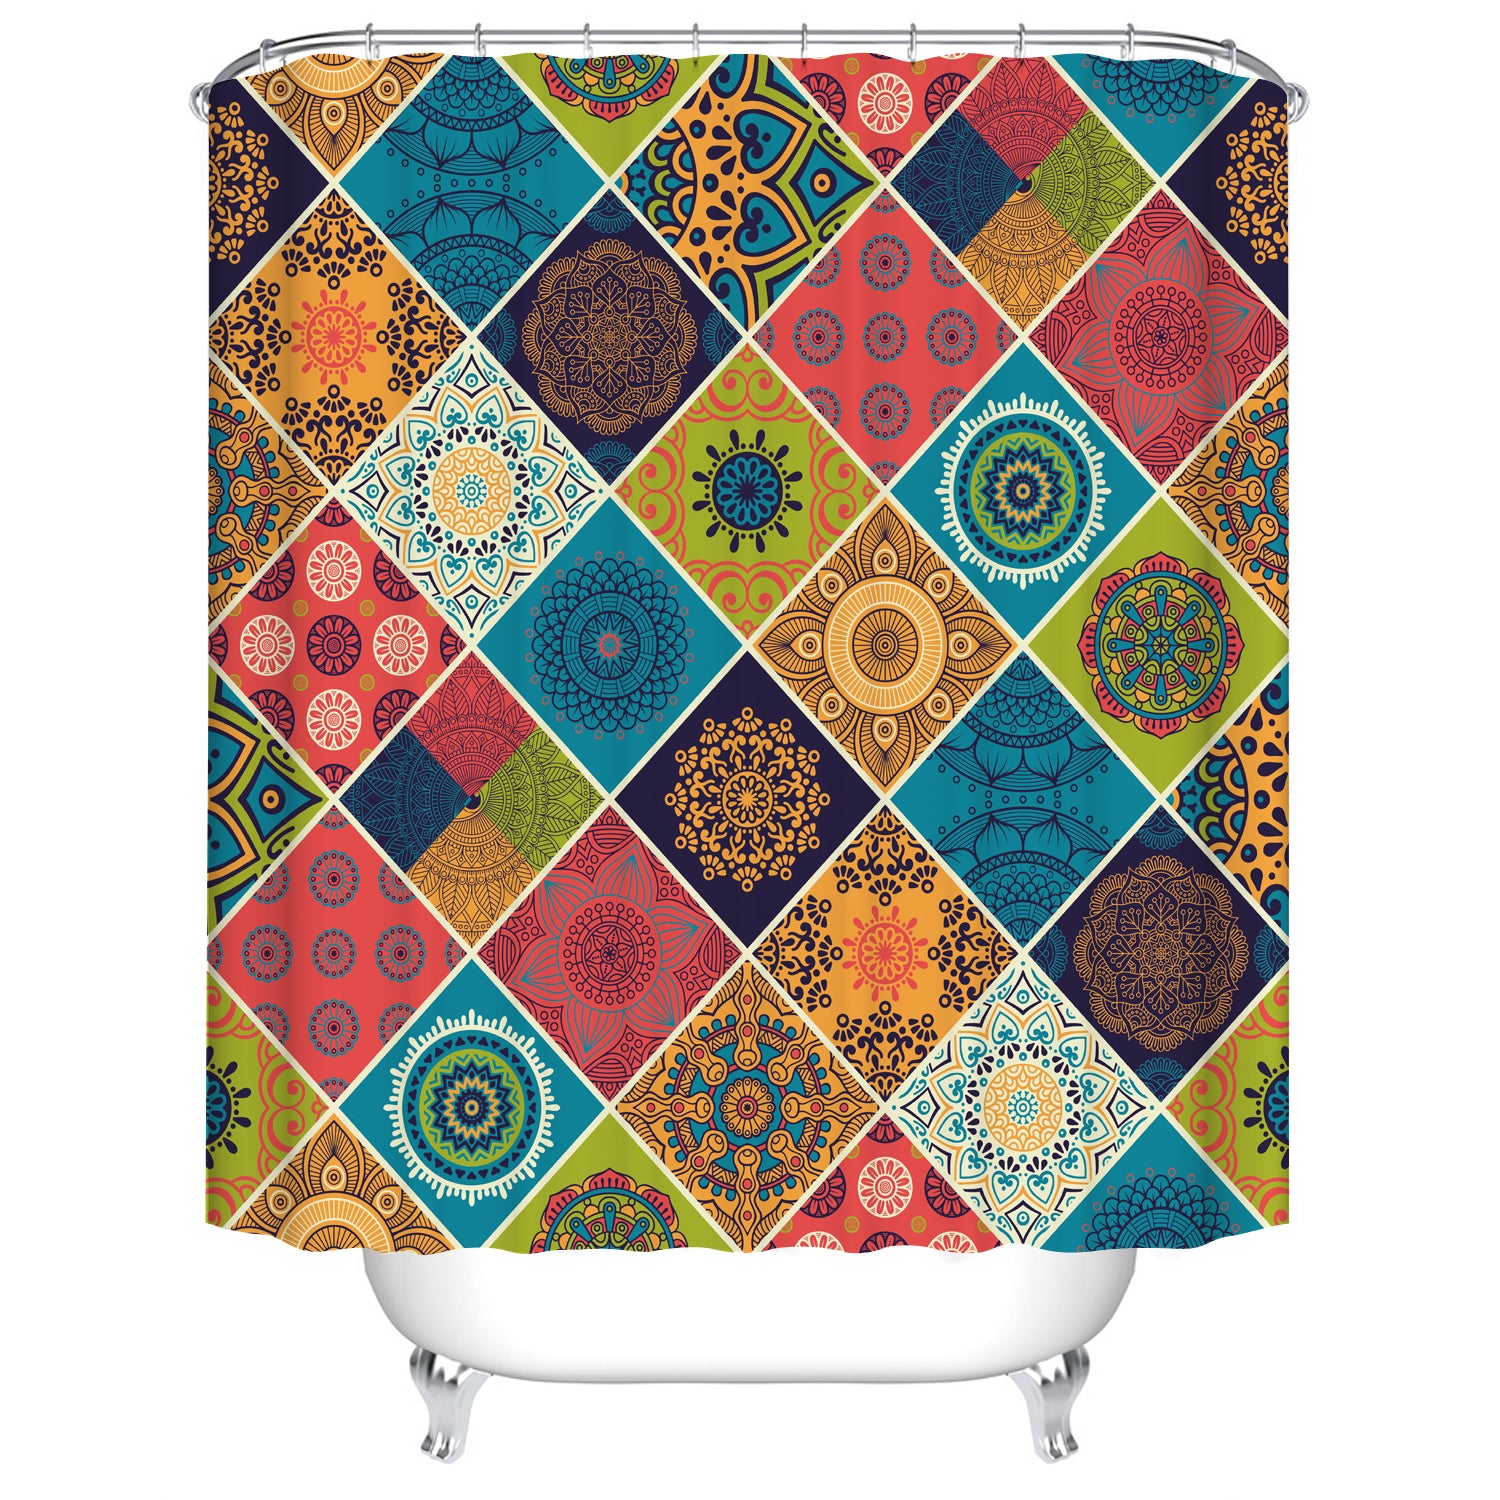 Retro Luxury Seamless Geometric Mandala Flower Azulejo Style Mosaic Shower Curtain